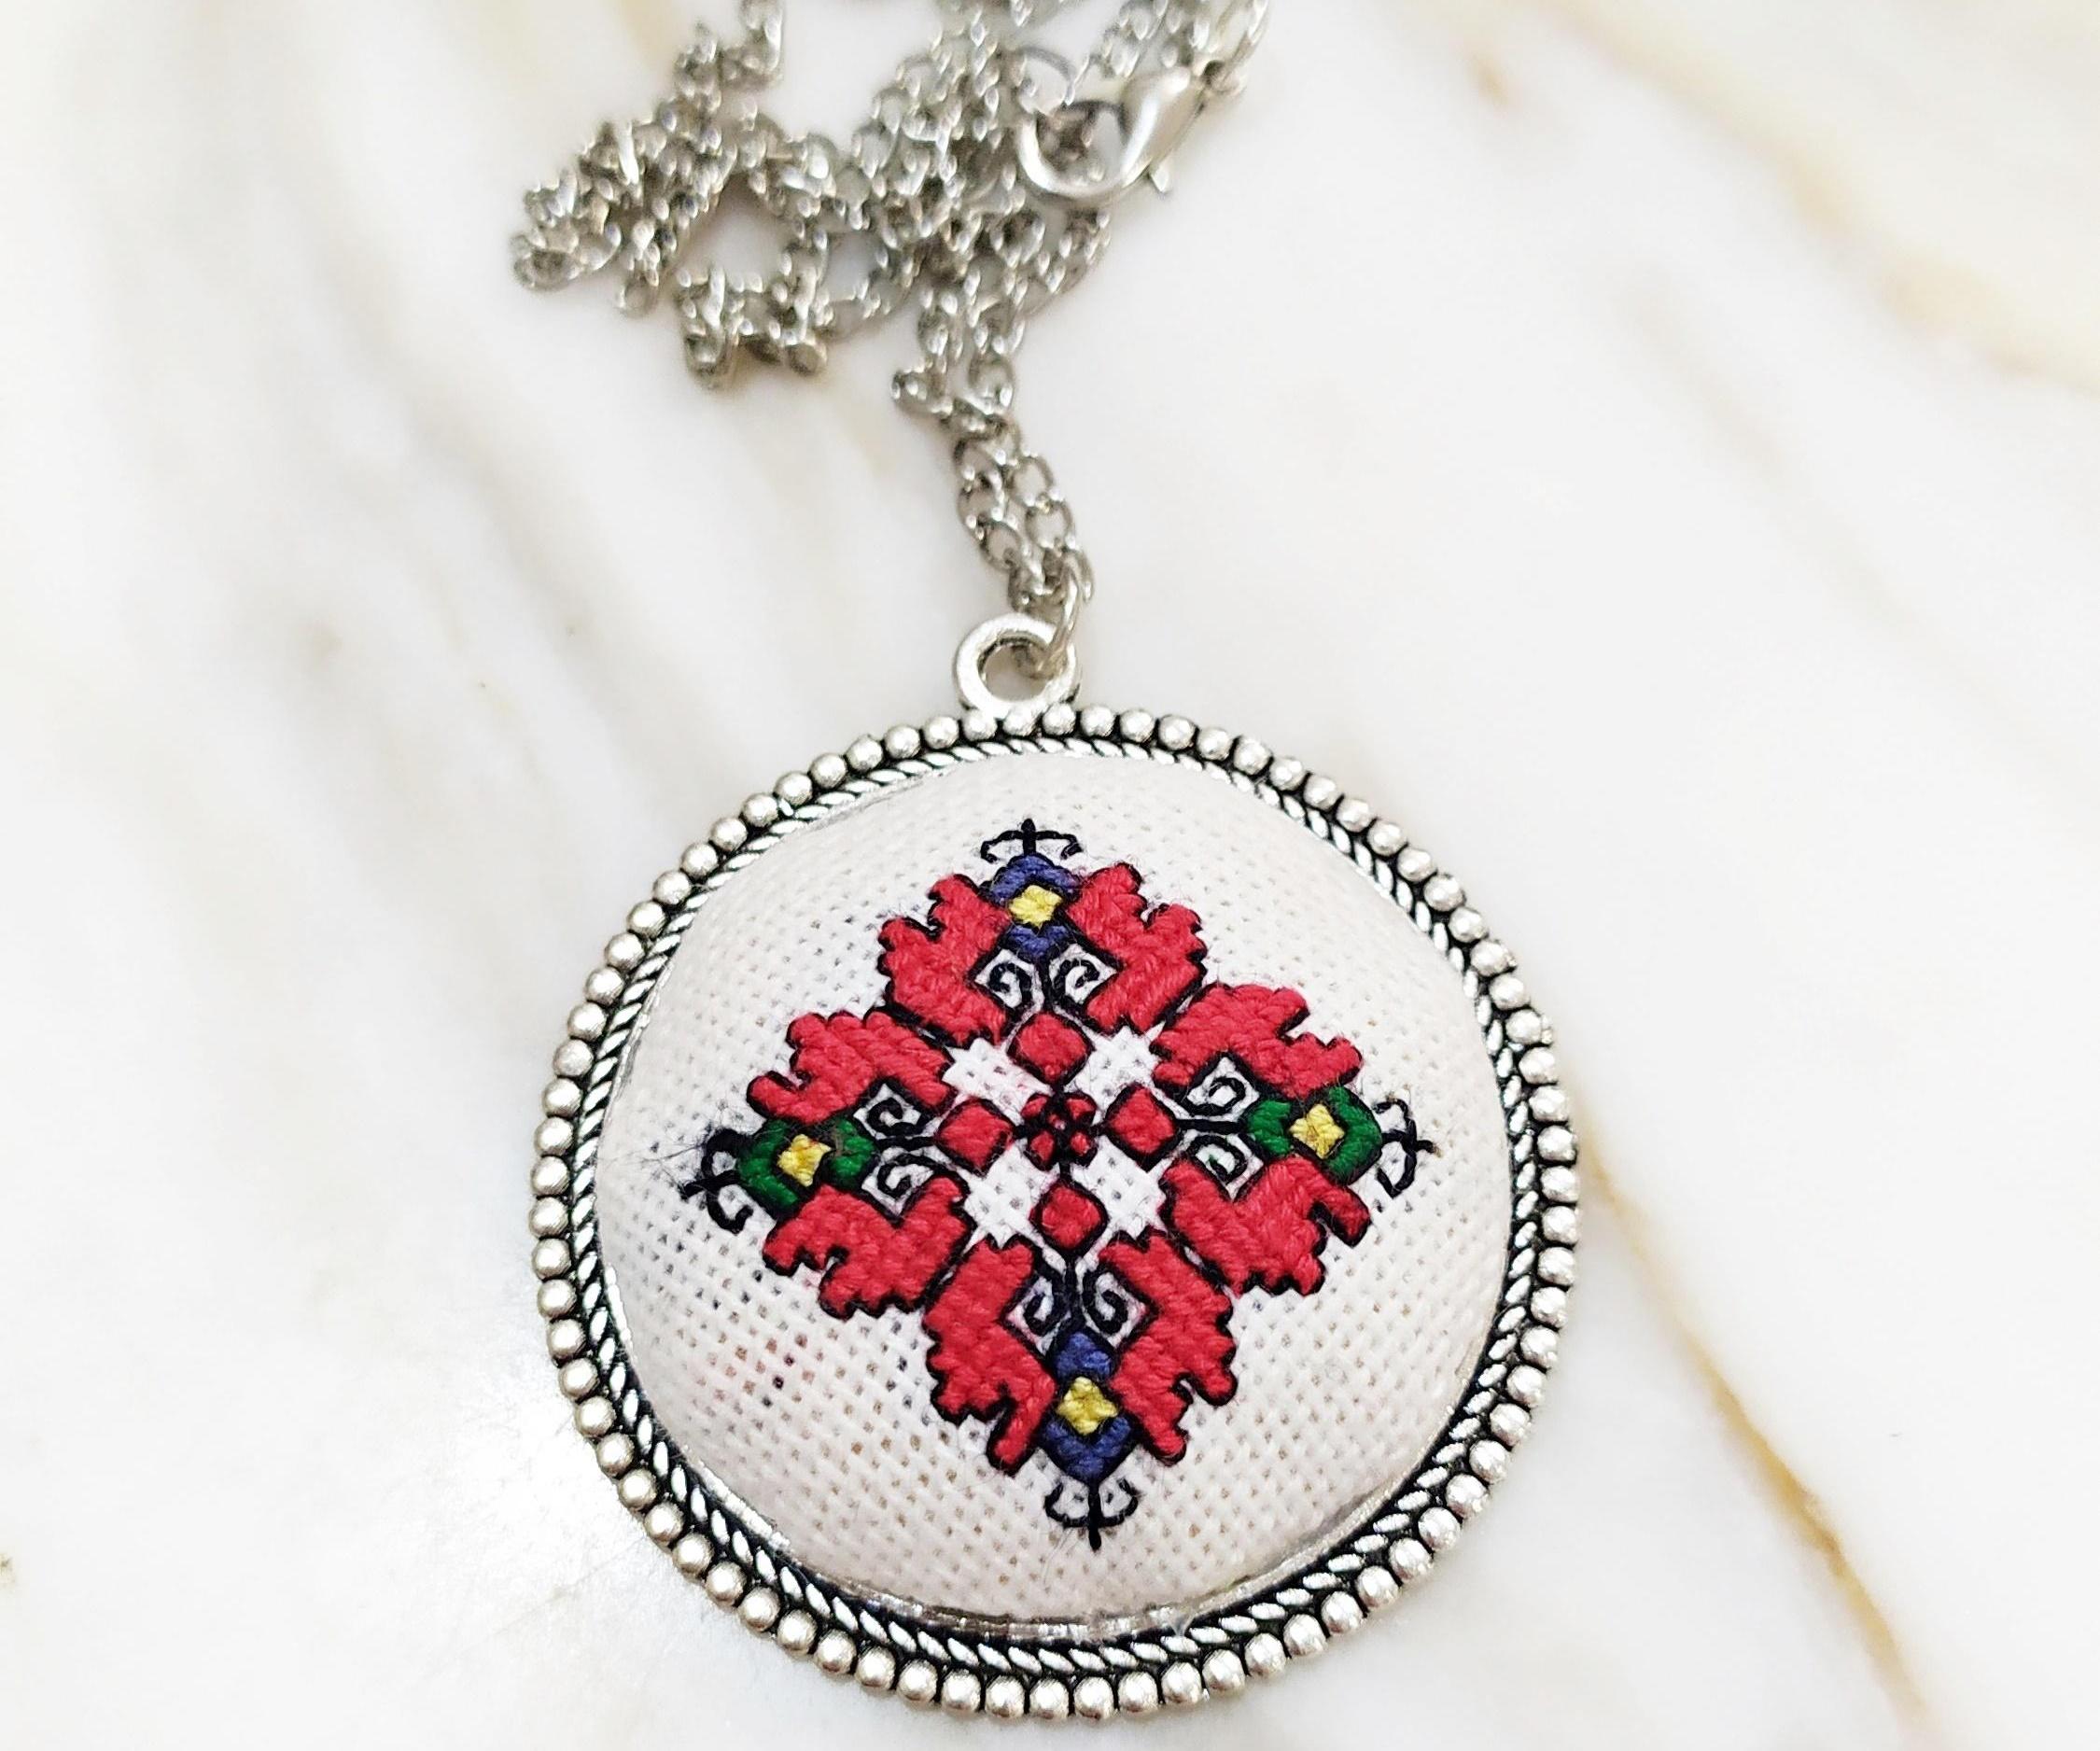 How to Make a Bulgarian Shevitsa Necklace